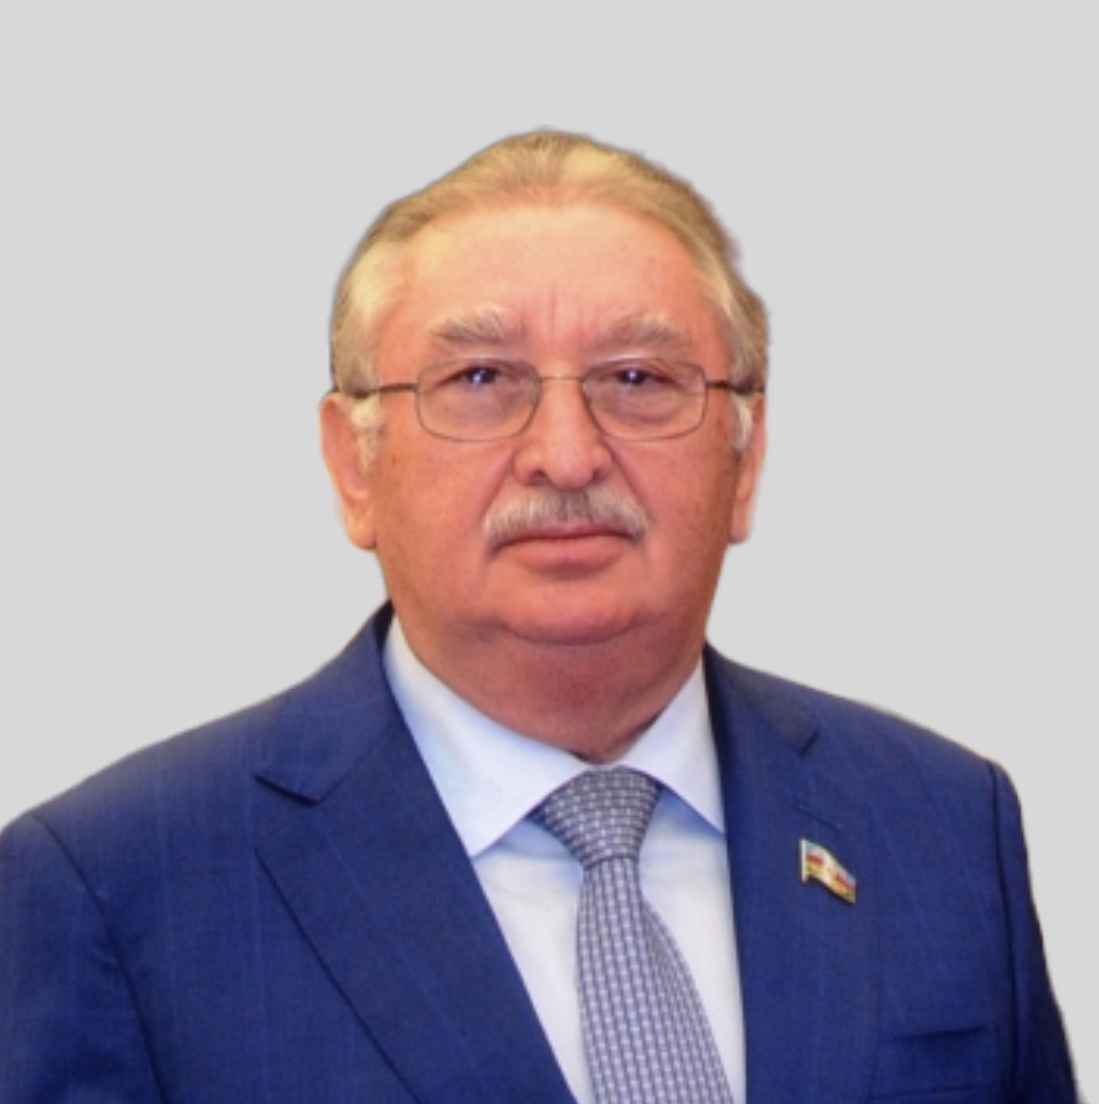 Professor Ahmad Valiyev